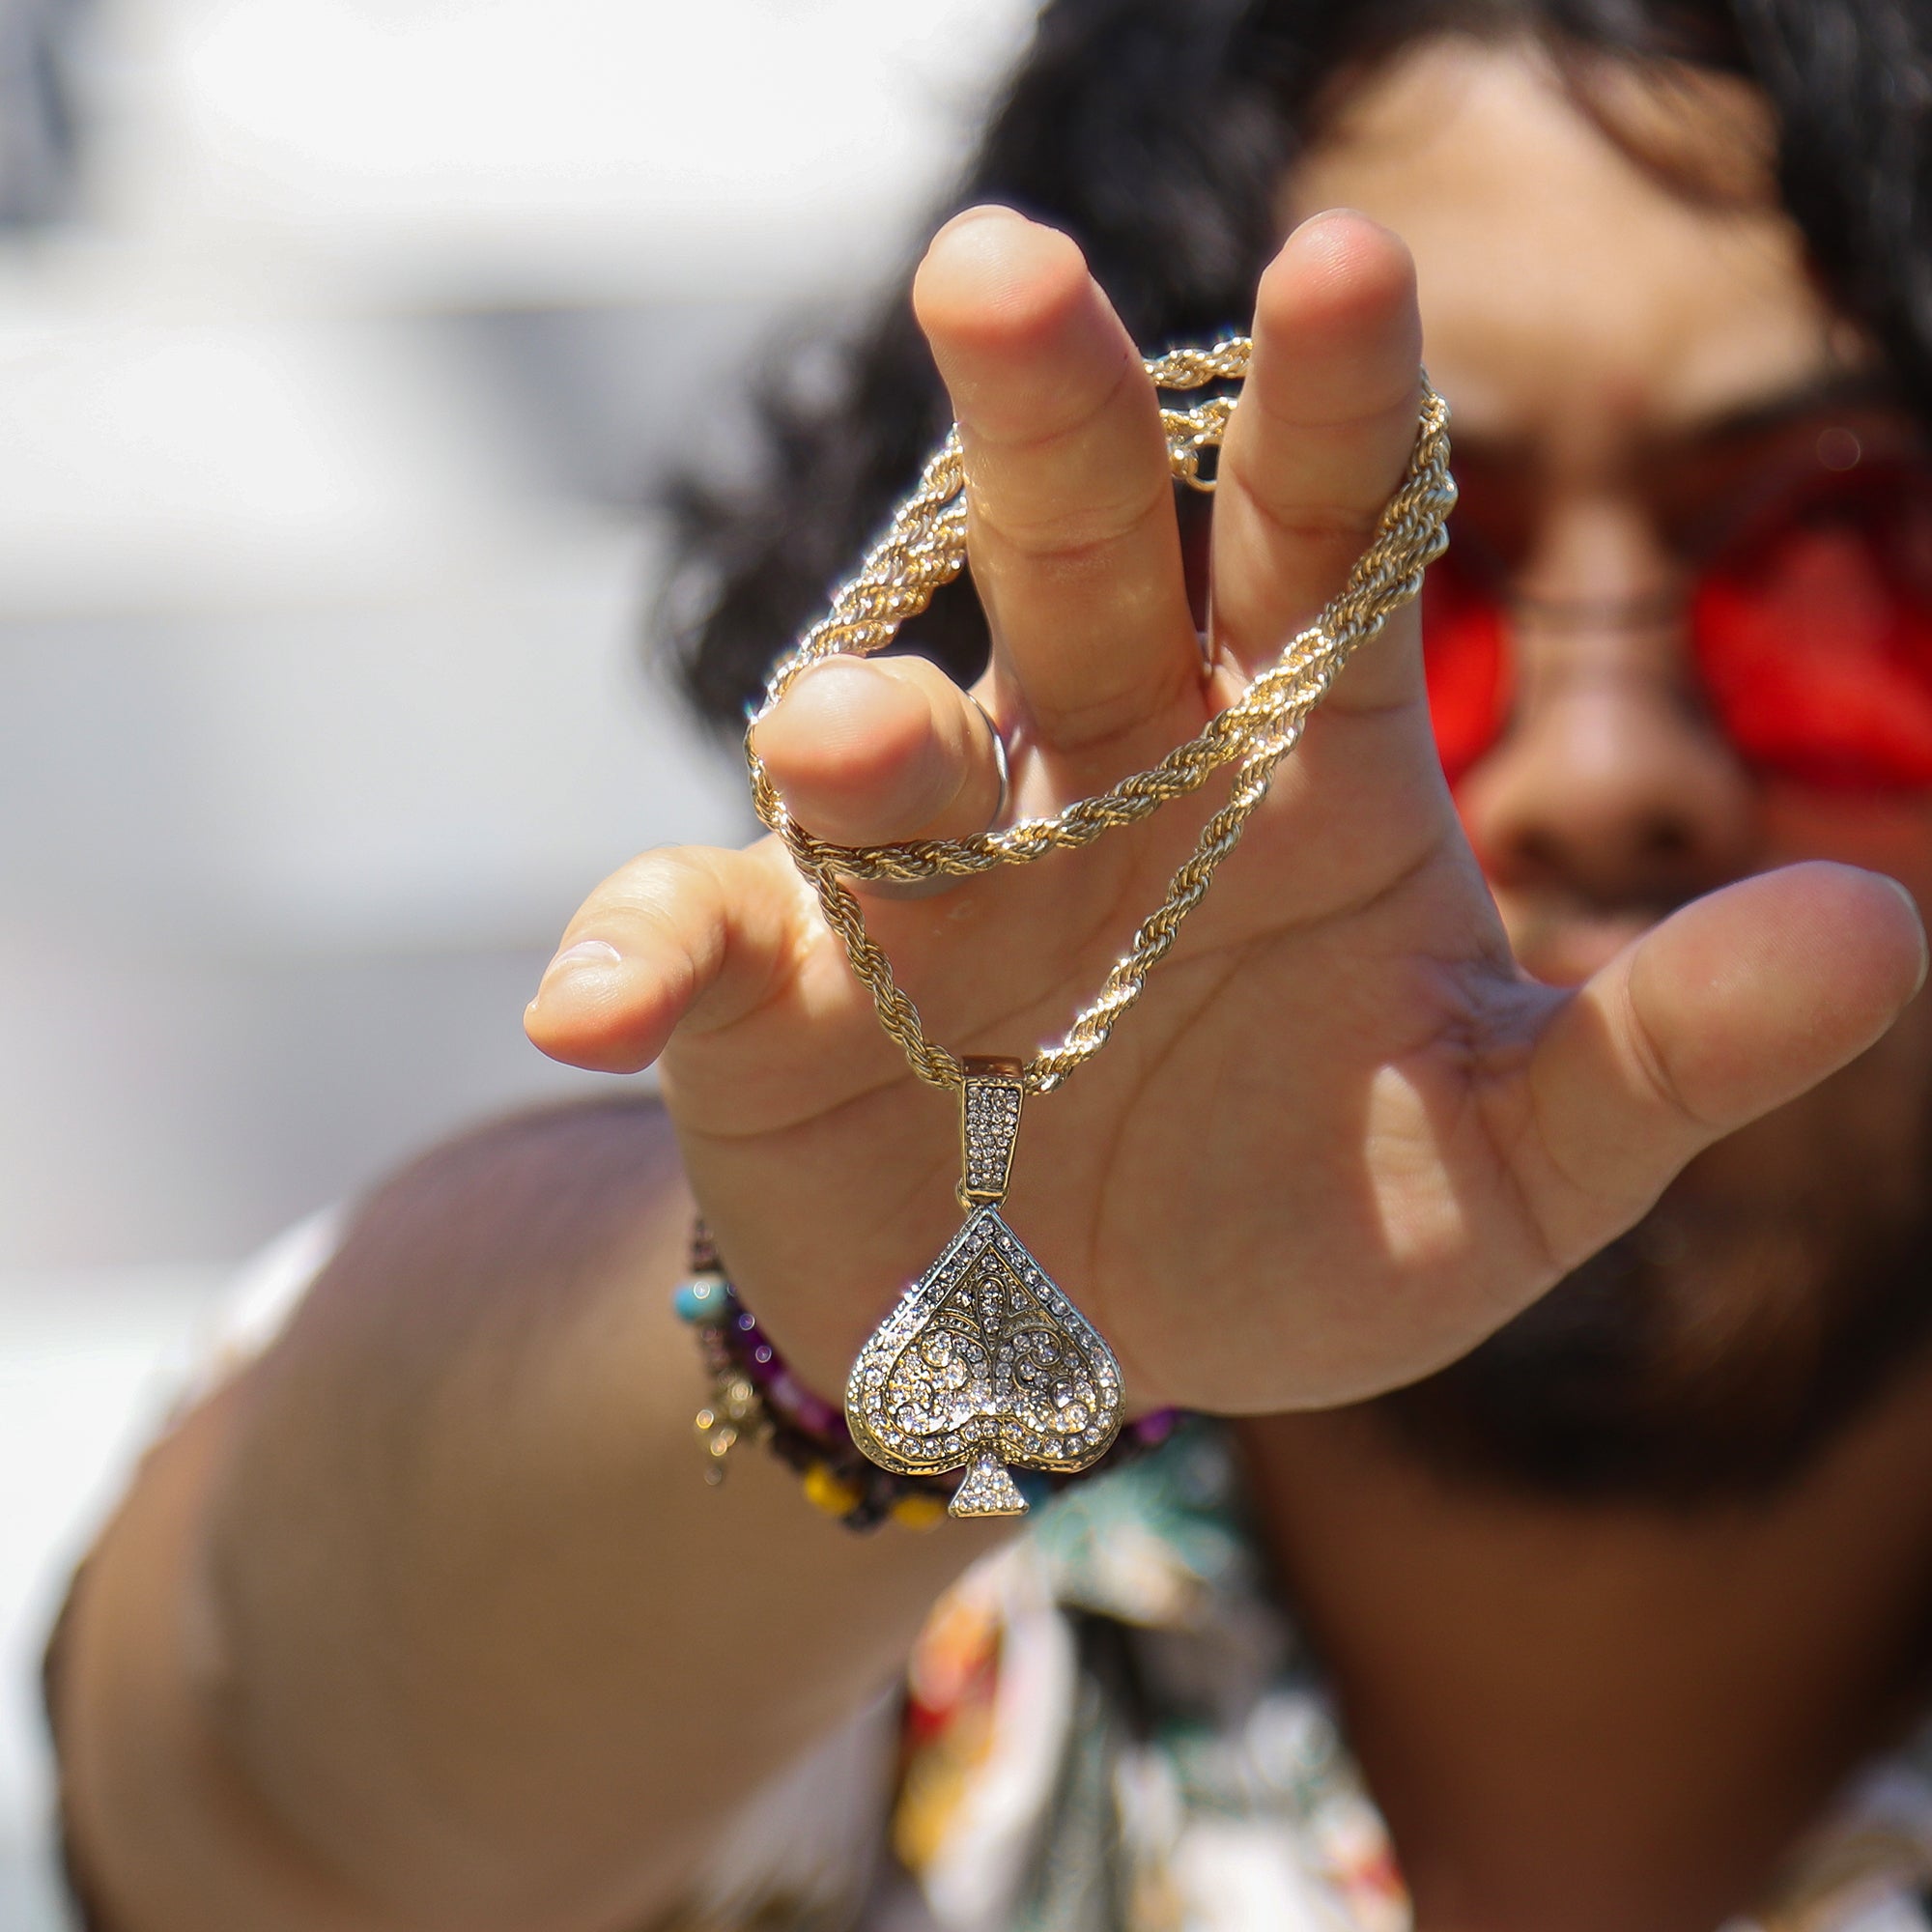 Ace Of Sapdes Pendant Rope Chain Men's Hip Hop 18k Cz Jewelry Necklace Choker